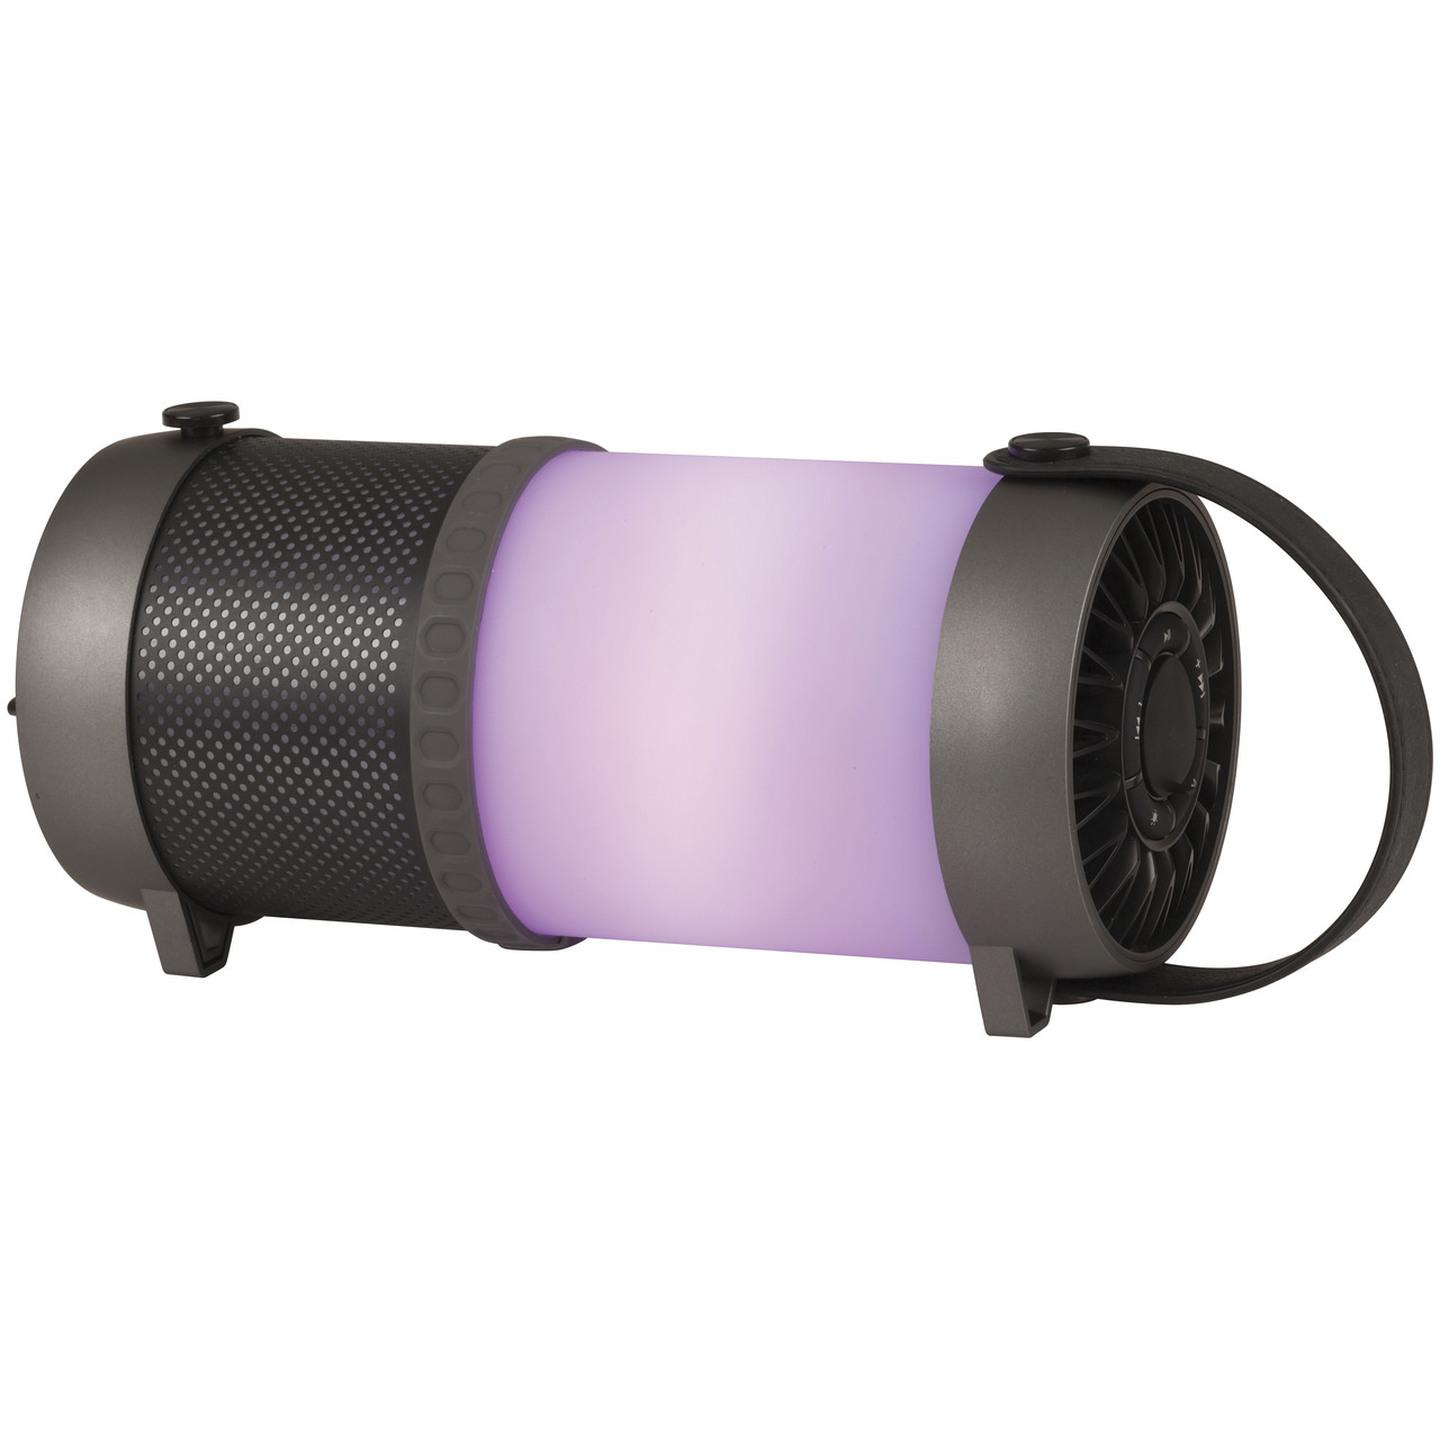 Speaker Lantern with Bluetooth Technology